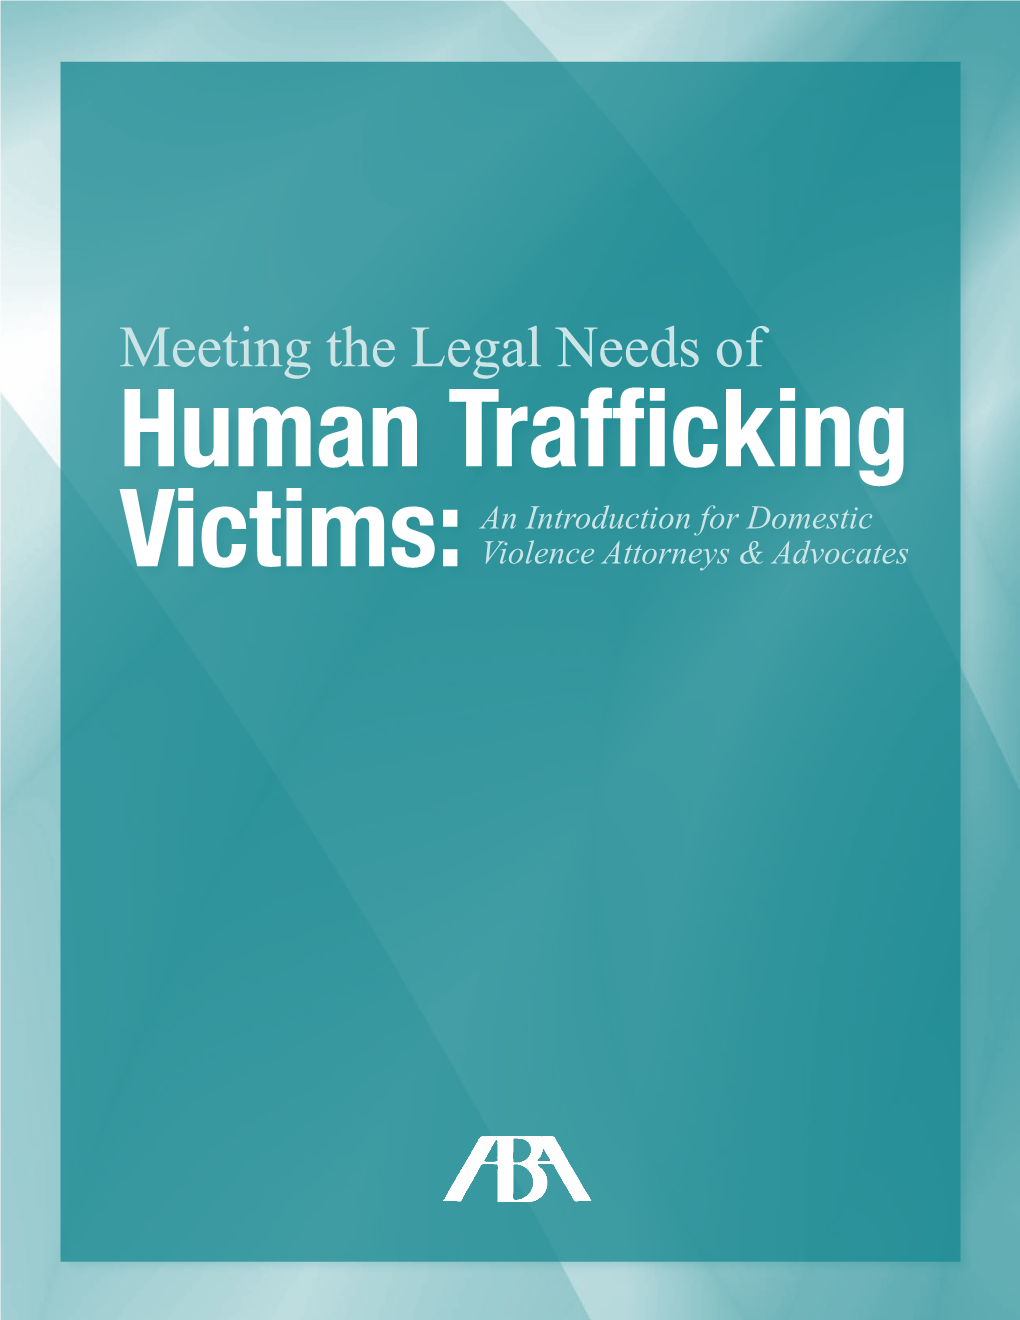 Human Trafficking Victims